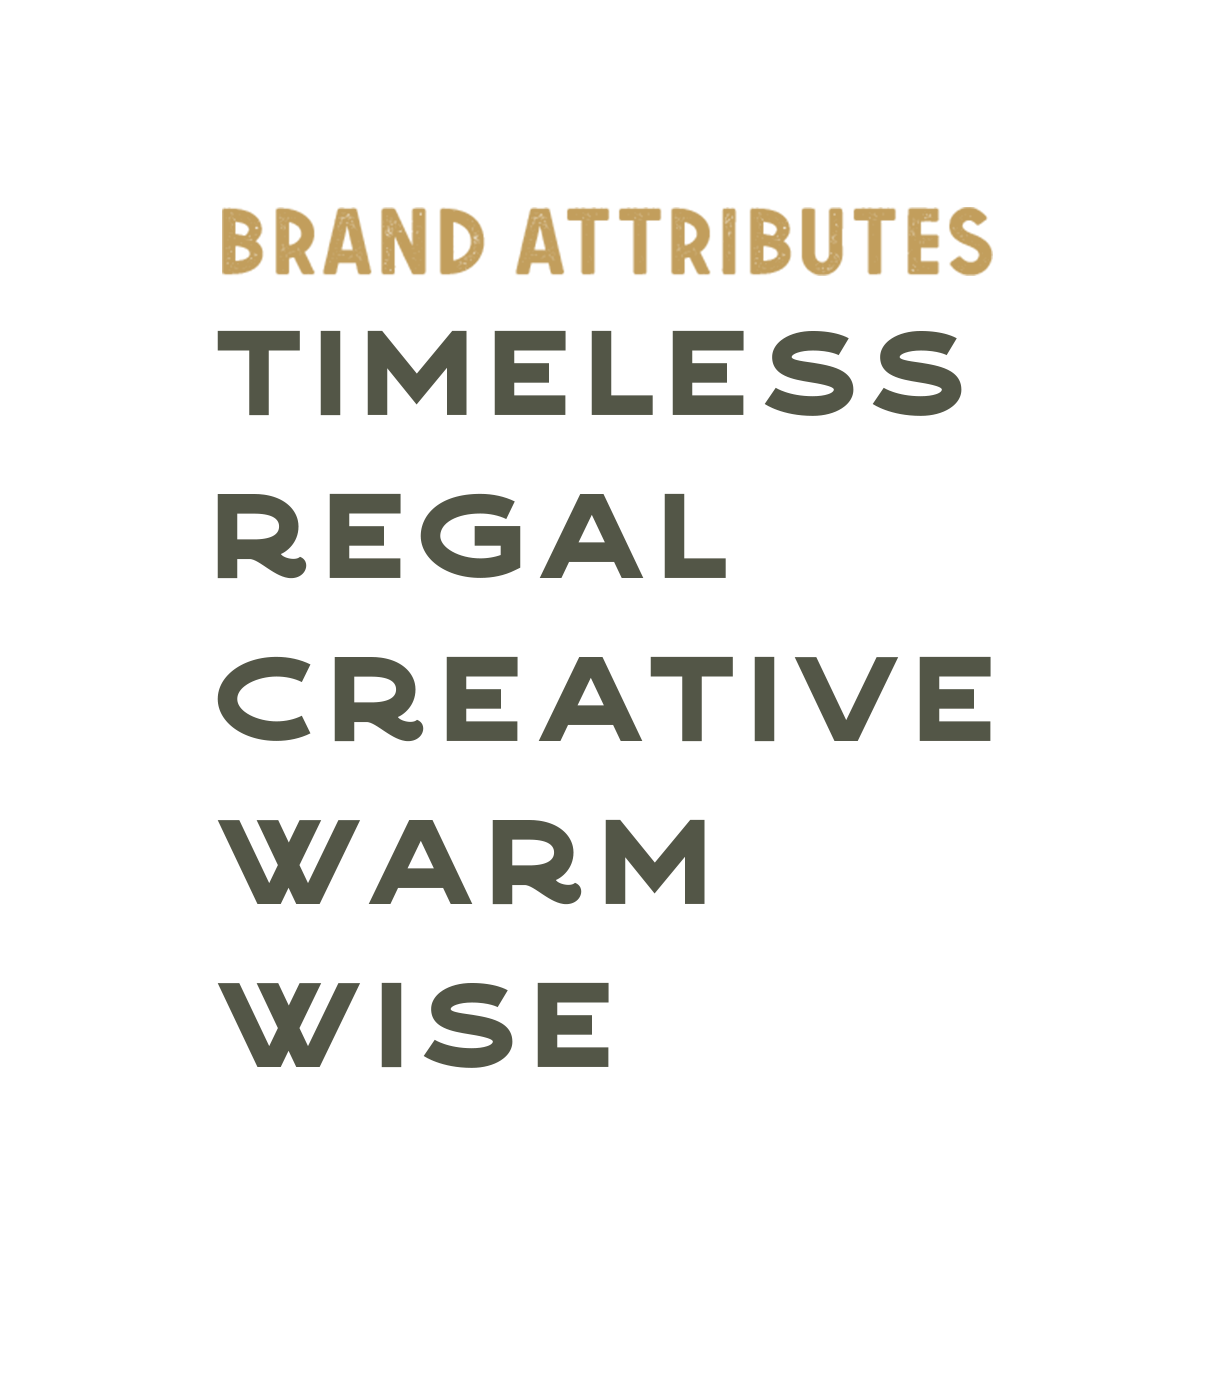 Saint Goose brand attributes - timeless, regal, creative, warm, wise